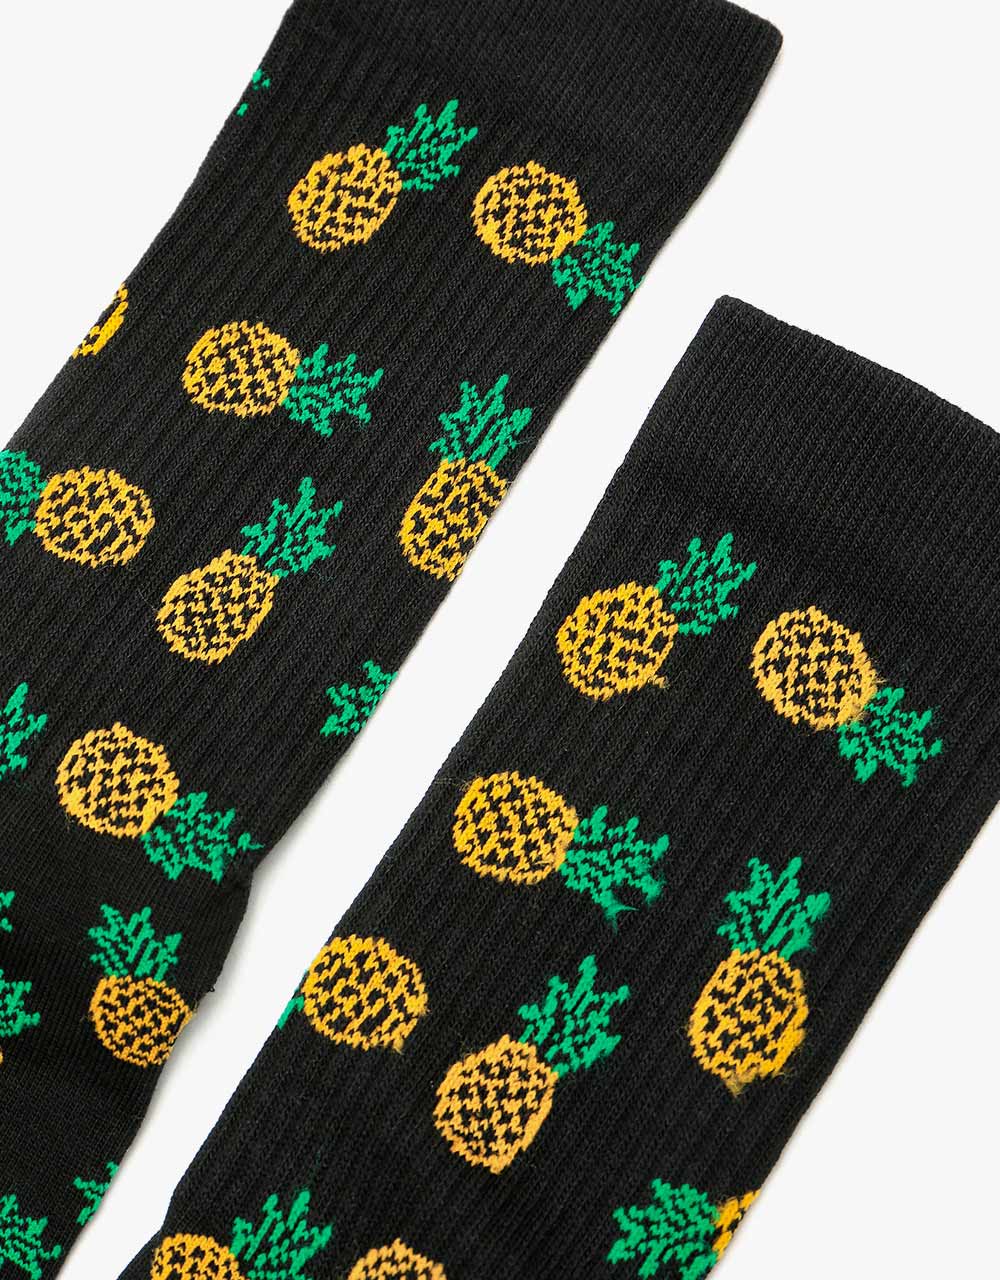 Route One Pineapples Socks - Black